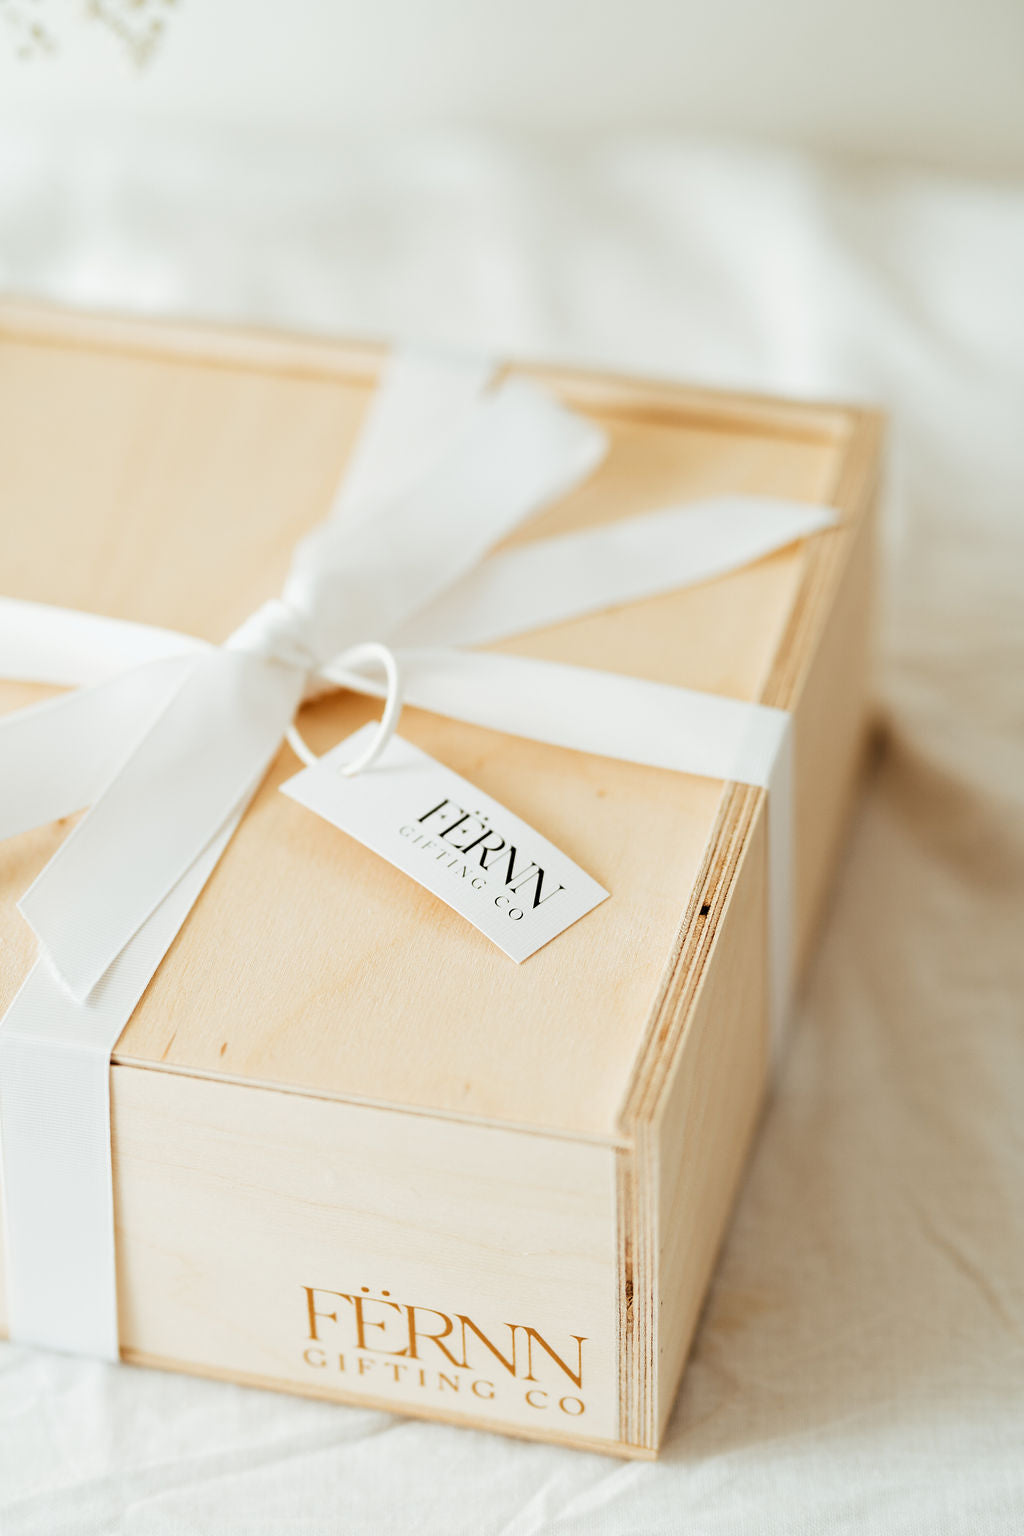 https://cdn.shopify.com/s/files/1/0524/6946/5254/products/wooden-keepsake-gift-box-gift-wrapped-fernn-gifting-co.jpg?v=1664982216